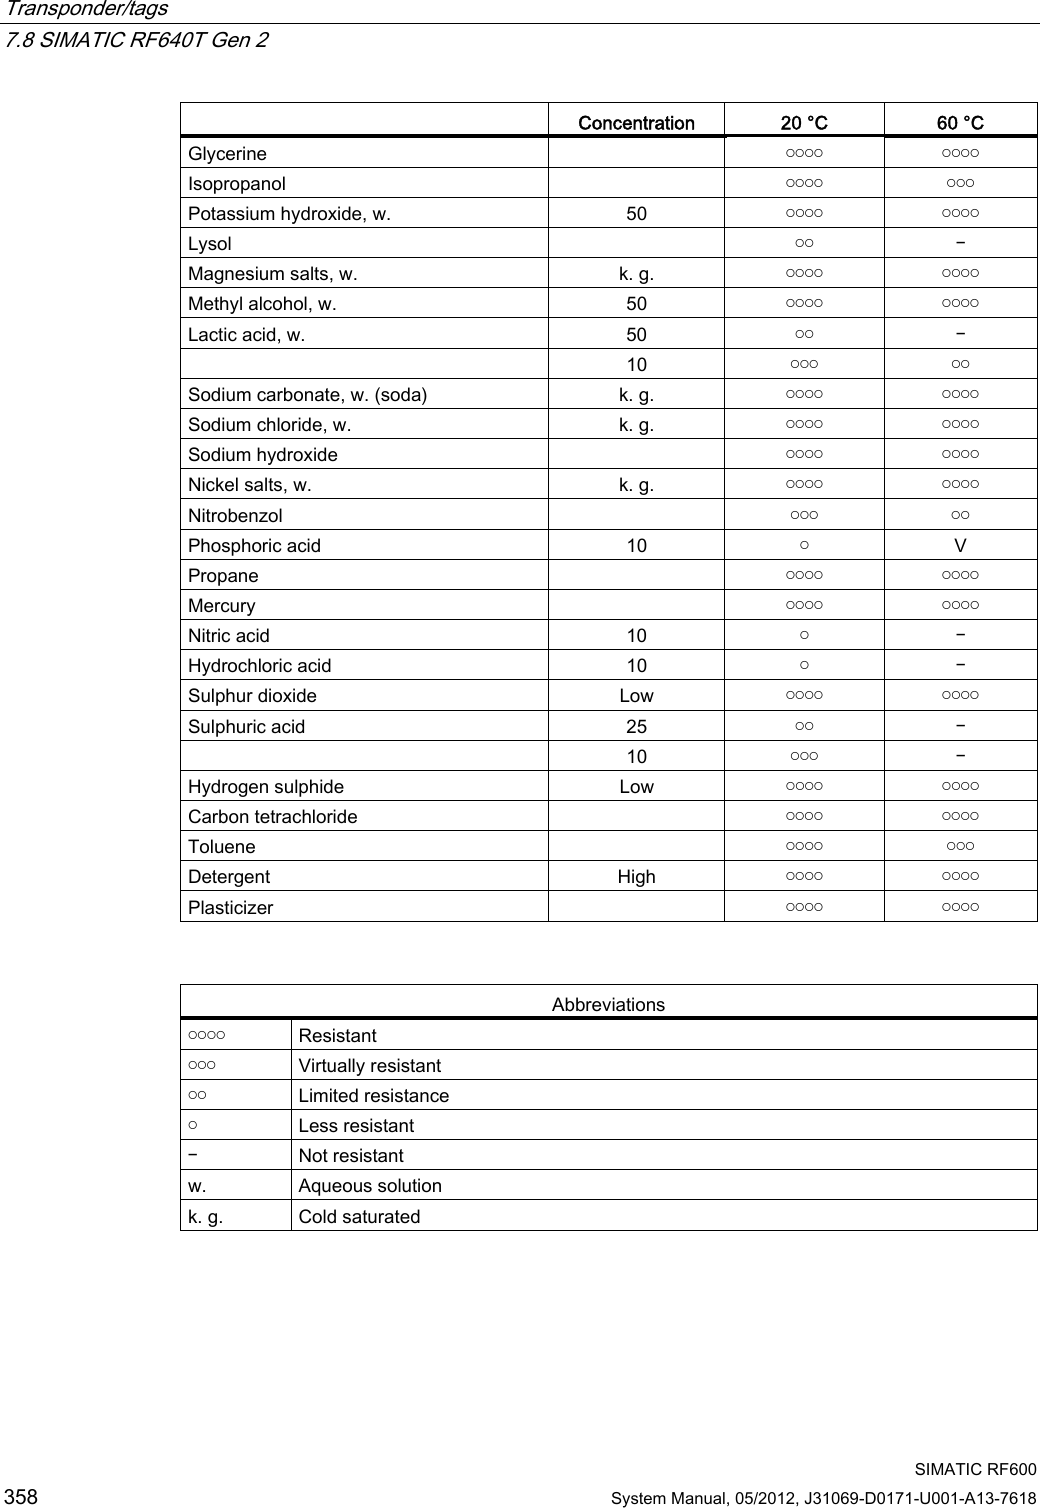 Transponder/tags   7.8 SIMATIC RF640T Gen 2  SIMATIC RF600 358 System Manual, 05/2012, J31069-D0171-U001-A13-7618   Concentration  20 °C  60 °C Glycerine    ￮￮￮￮  ￮￮￮￮ Isopropanol    ￮￮￮￮  ￮￮￮ Potassium hydroxide, w.  50  ￮￮￮￮  ￮￮￮￮ Lysol    ￮￮  ￚ Magnesium salts, w.  k. g.  ￮￮￮￮  ￮￮￮￮ Methyl alcohol, w.  50  ￮￮￮￮  ￮￮￮￮ Lactic acid, w.  50  ￮￮  ￚ   10  ￮￮￮  ￮￮ Sodium carbonate, w. (soda)  k. g.  ￮￮￮￮  ￮￮￮￮ Sodium chloride, w.  k. g.  ￮￮￮￮  ￮￮￮￮ Sodium hydroxide    ￮￮￮￮  ￮￮￮￮ Nickel salts, w.  k. g.  ￮￮￮￮  ￮￮￮￮ Nitrobenzol    ￮￮￮  ￮￮ Phosphoric acid  10  ￮  V Propane    ￮￮￮￮  ￮￮￮￮ Mercury    ￮￮￮￮  ￮￮￮￮ Nitric acid  10  ￮  ￚ Hydrochloric acid  10  ￮  ￚ Sulphur dioxide  Low  ￮￮￮￮  ￮￮￮￮ Sulphuric acid  25  ￮￮  ￚ   10  ￮￮￮  ￚ Hydrogen sulphide  Low  ￮￮￮￮  ￮￮￮￮ Carbon tetrachloride    ￮￮￮￮  ￮￮￮￮ Toluene    ￮￮￮￮  ￮￮￮ Detergent  High  ￮￮￮￮  ￮￮￮￮ Plasticizer    ￮￮￮￮  ￮￮￮￮   Abbreviations ￮￮￮￮  Resistant ￮￮￮  Virtually resistant ￮￮  Limited resistance ￮  Less resistant ￚ  Not resistant w.  Aqueous solution k. g.  Cold saturated 